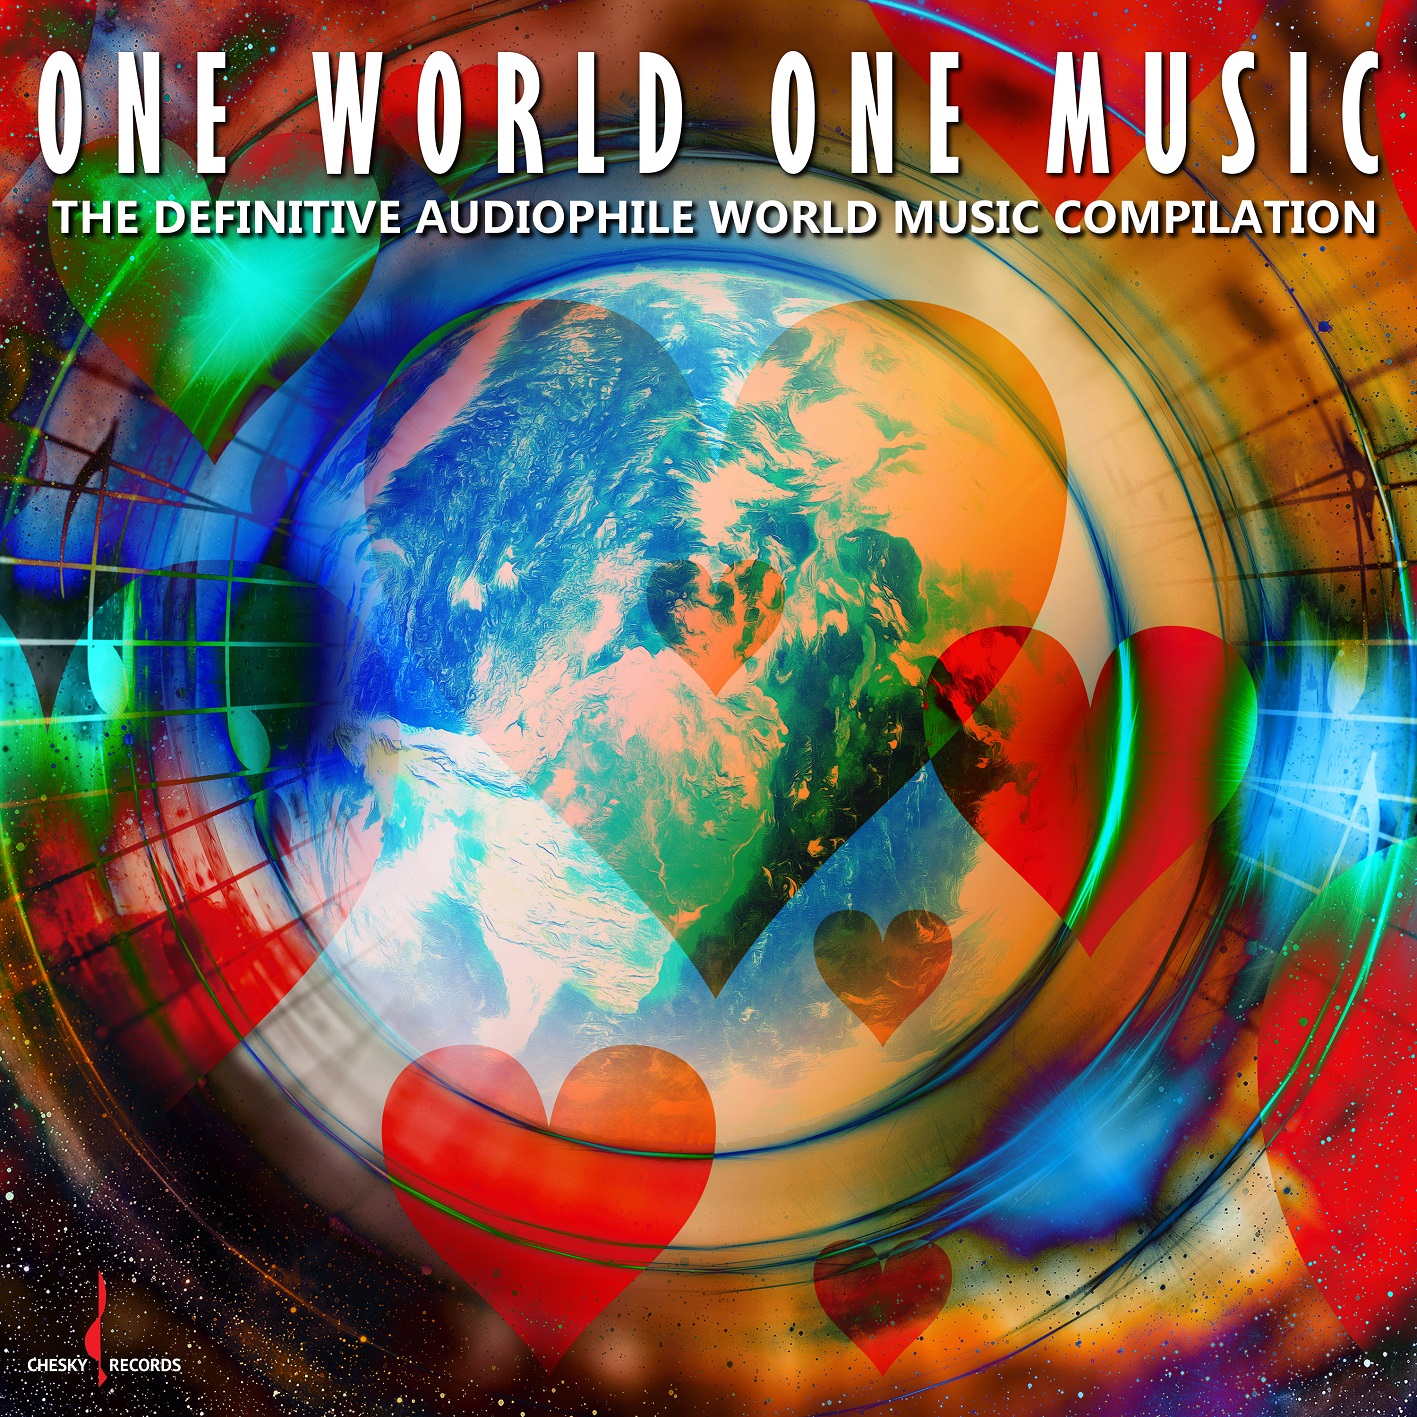 VA - One World One Music (2017) [HDTracks FLAC 24bit/96kHz]